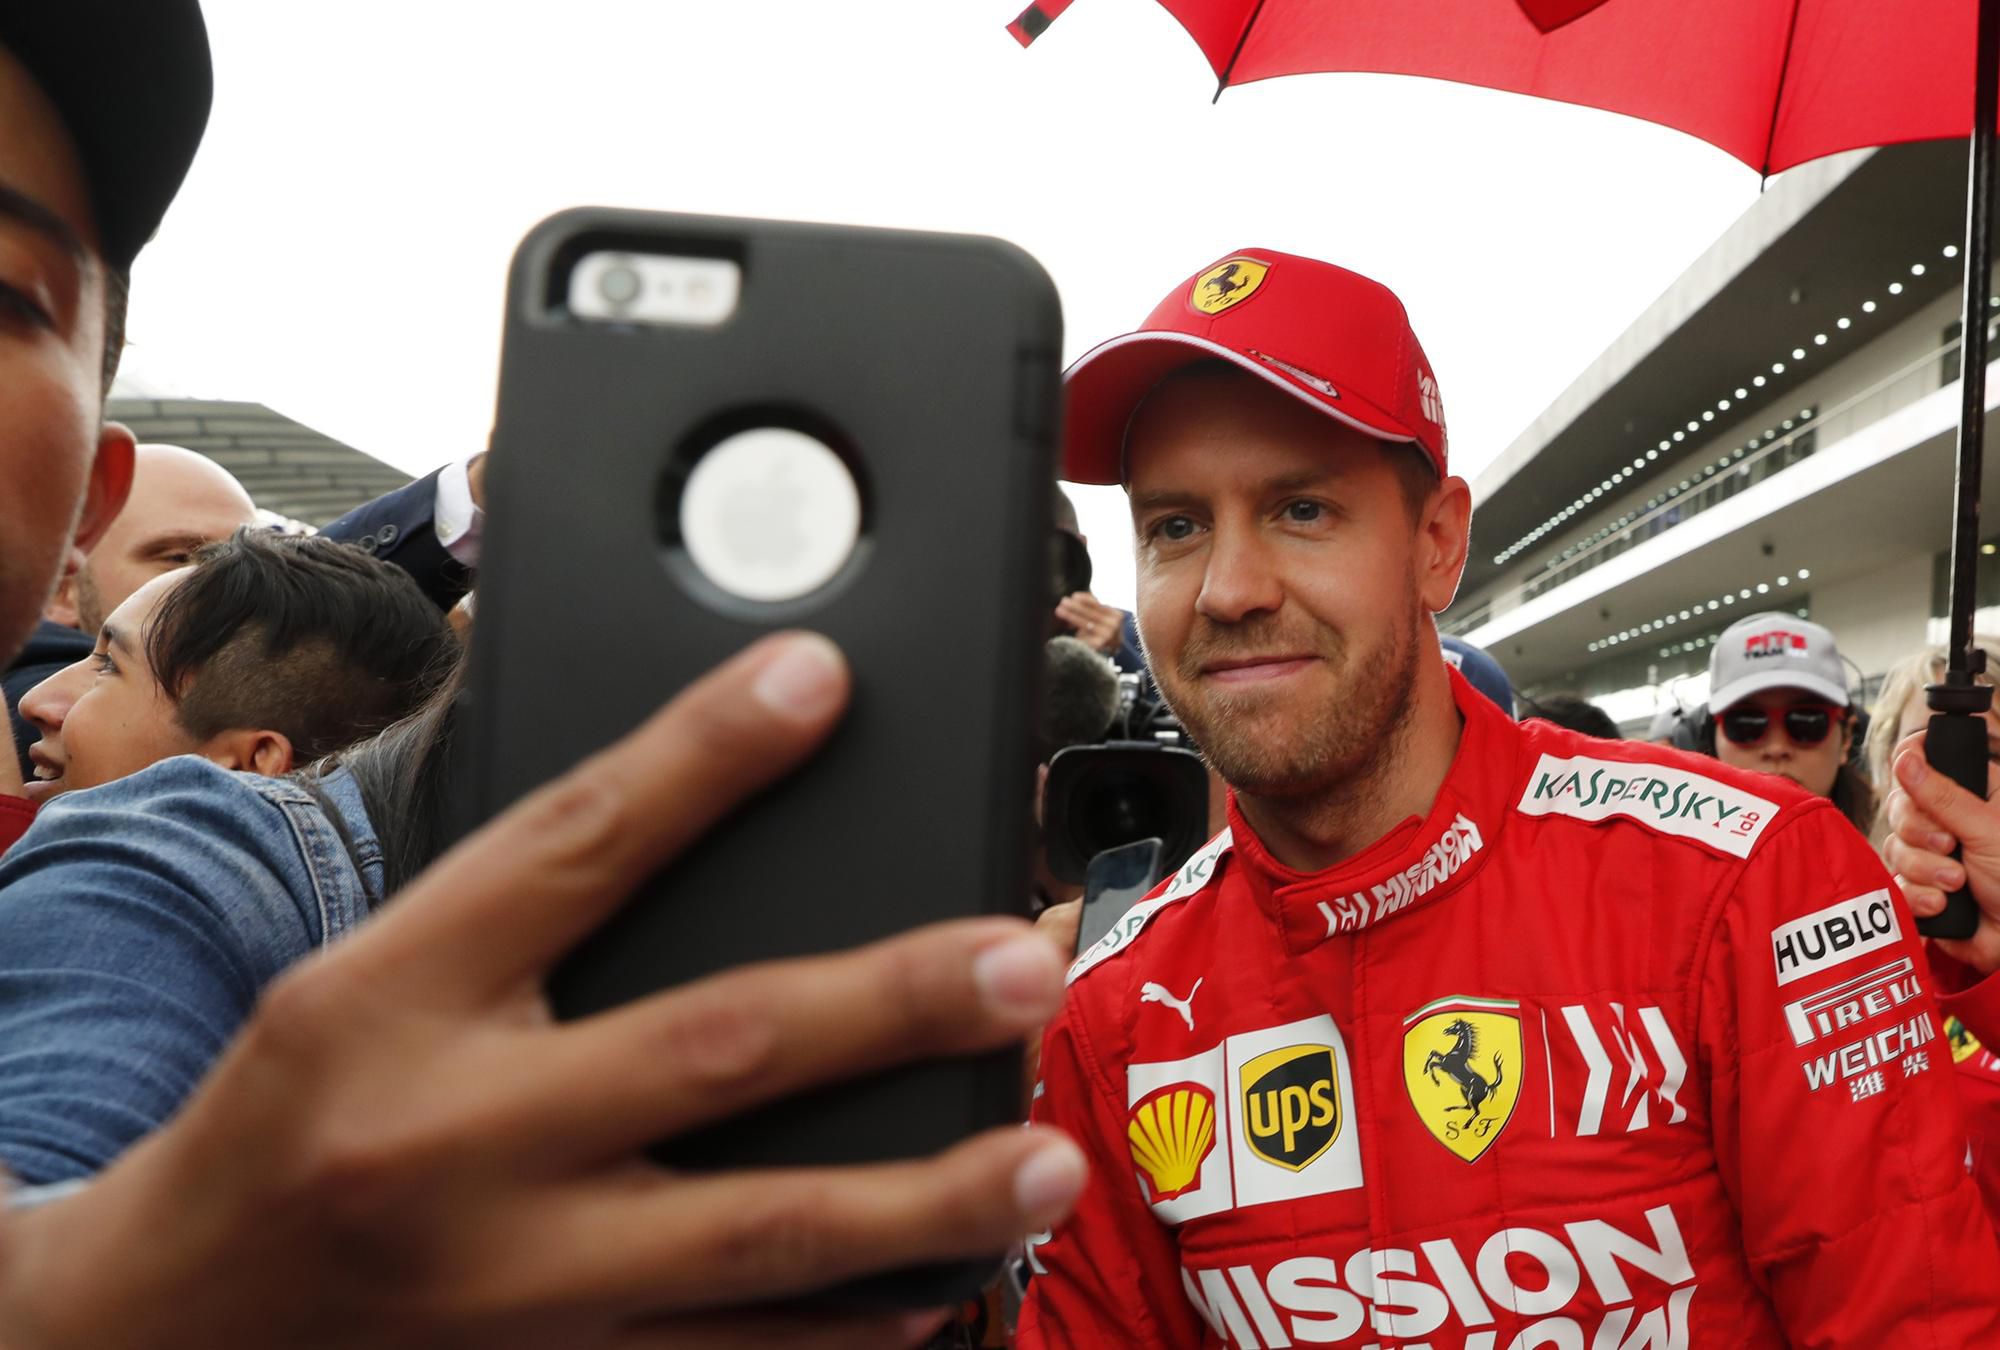 Nemecký pilot Formuly 1 Sebastian Vettel z tímu Ferrari pózuje fanúšikom počas autogramiády.